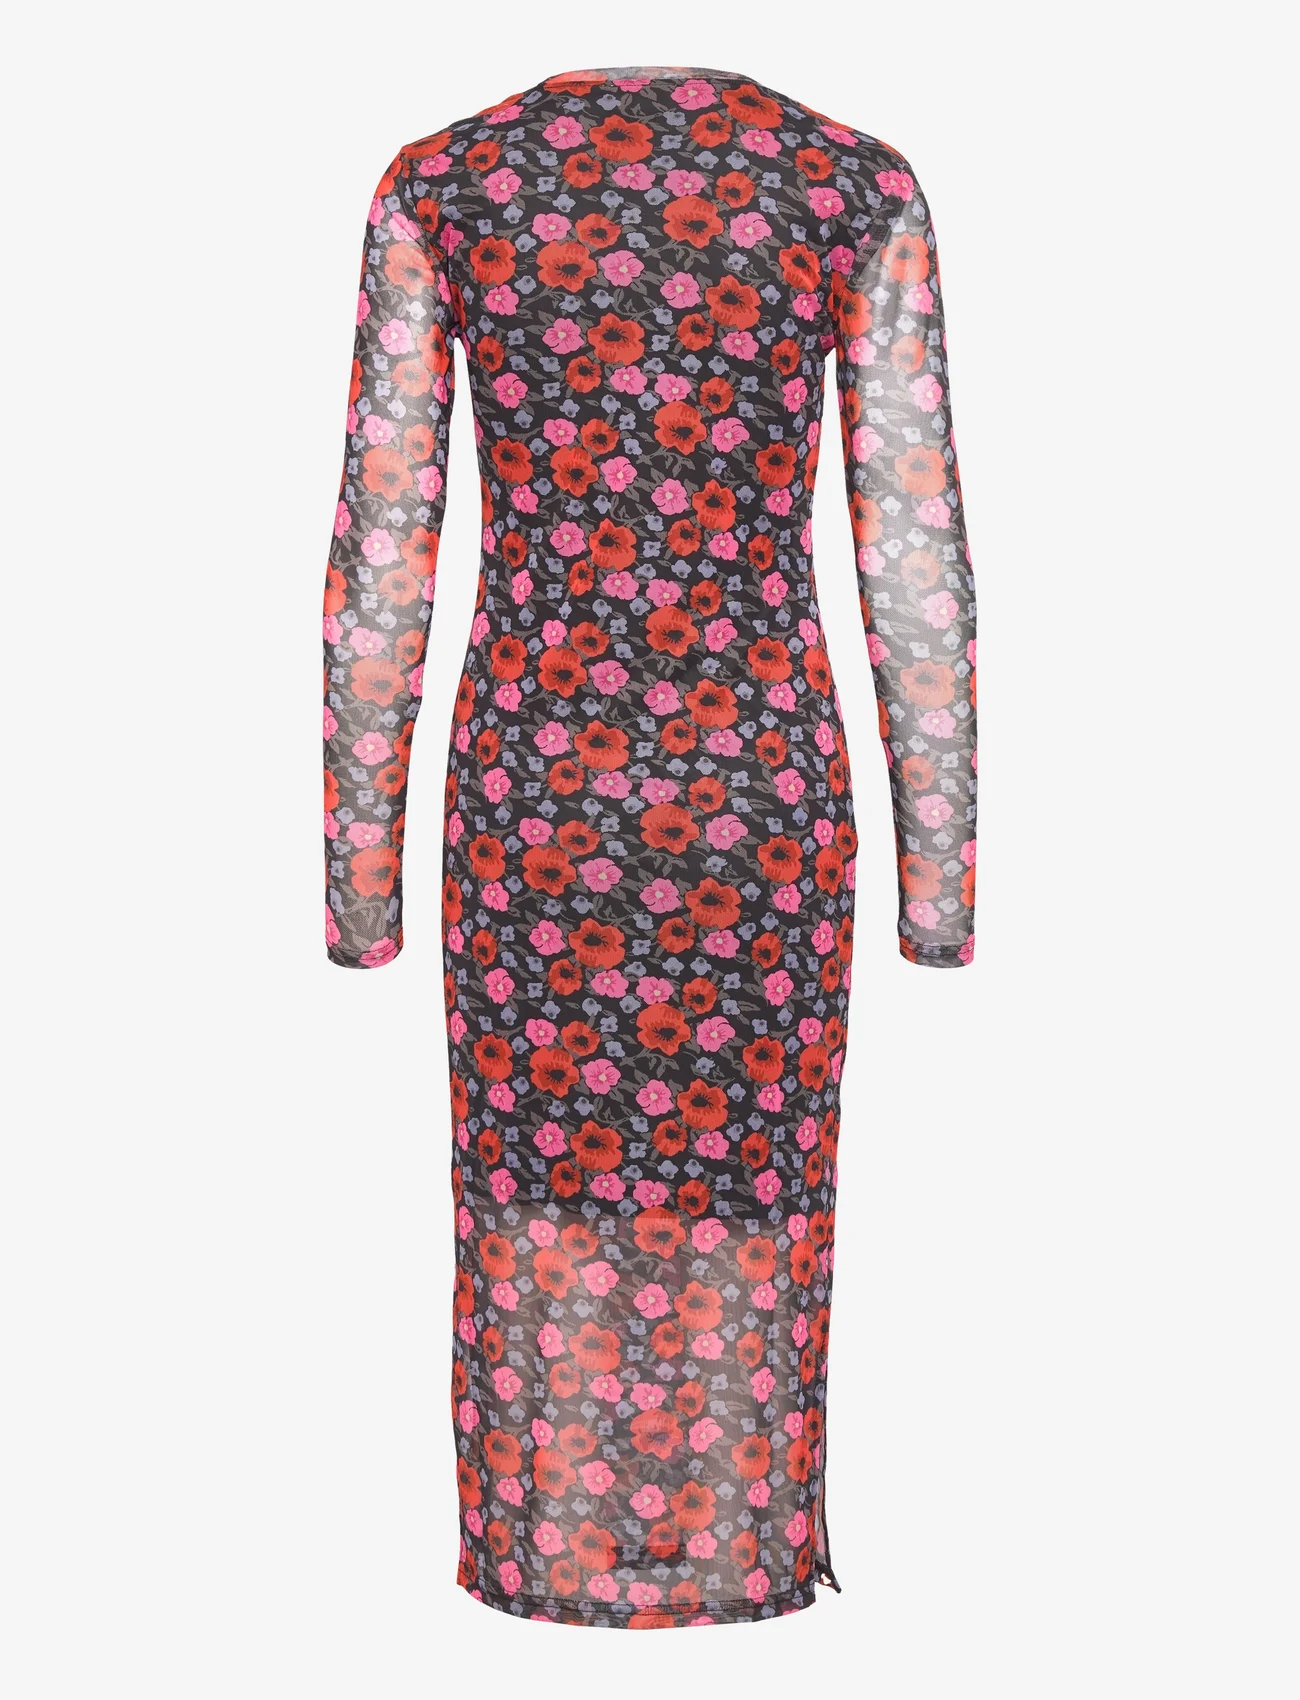 Modström - BinnaMD print dress - midi kjoler - flower blush - 1